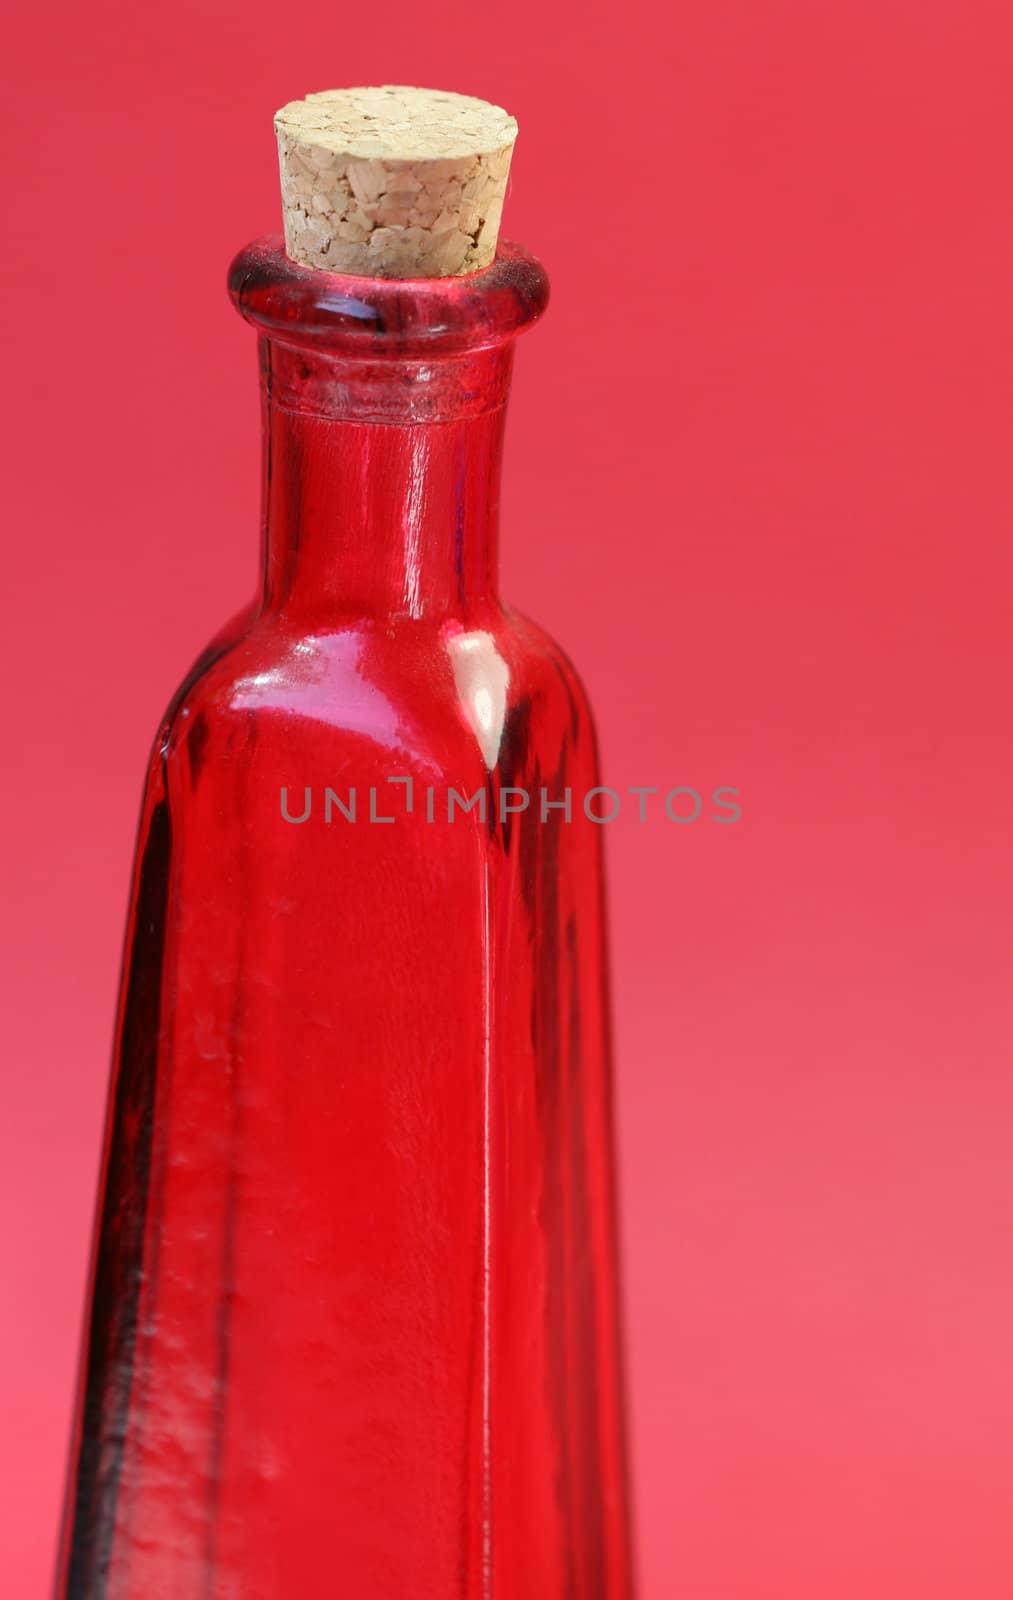 Red Bottle 2 by deserttrends